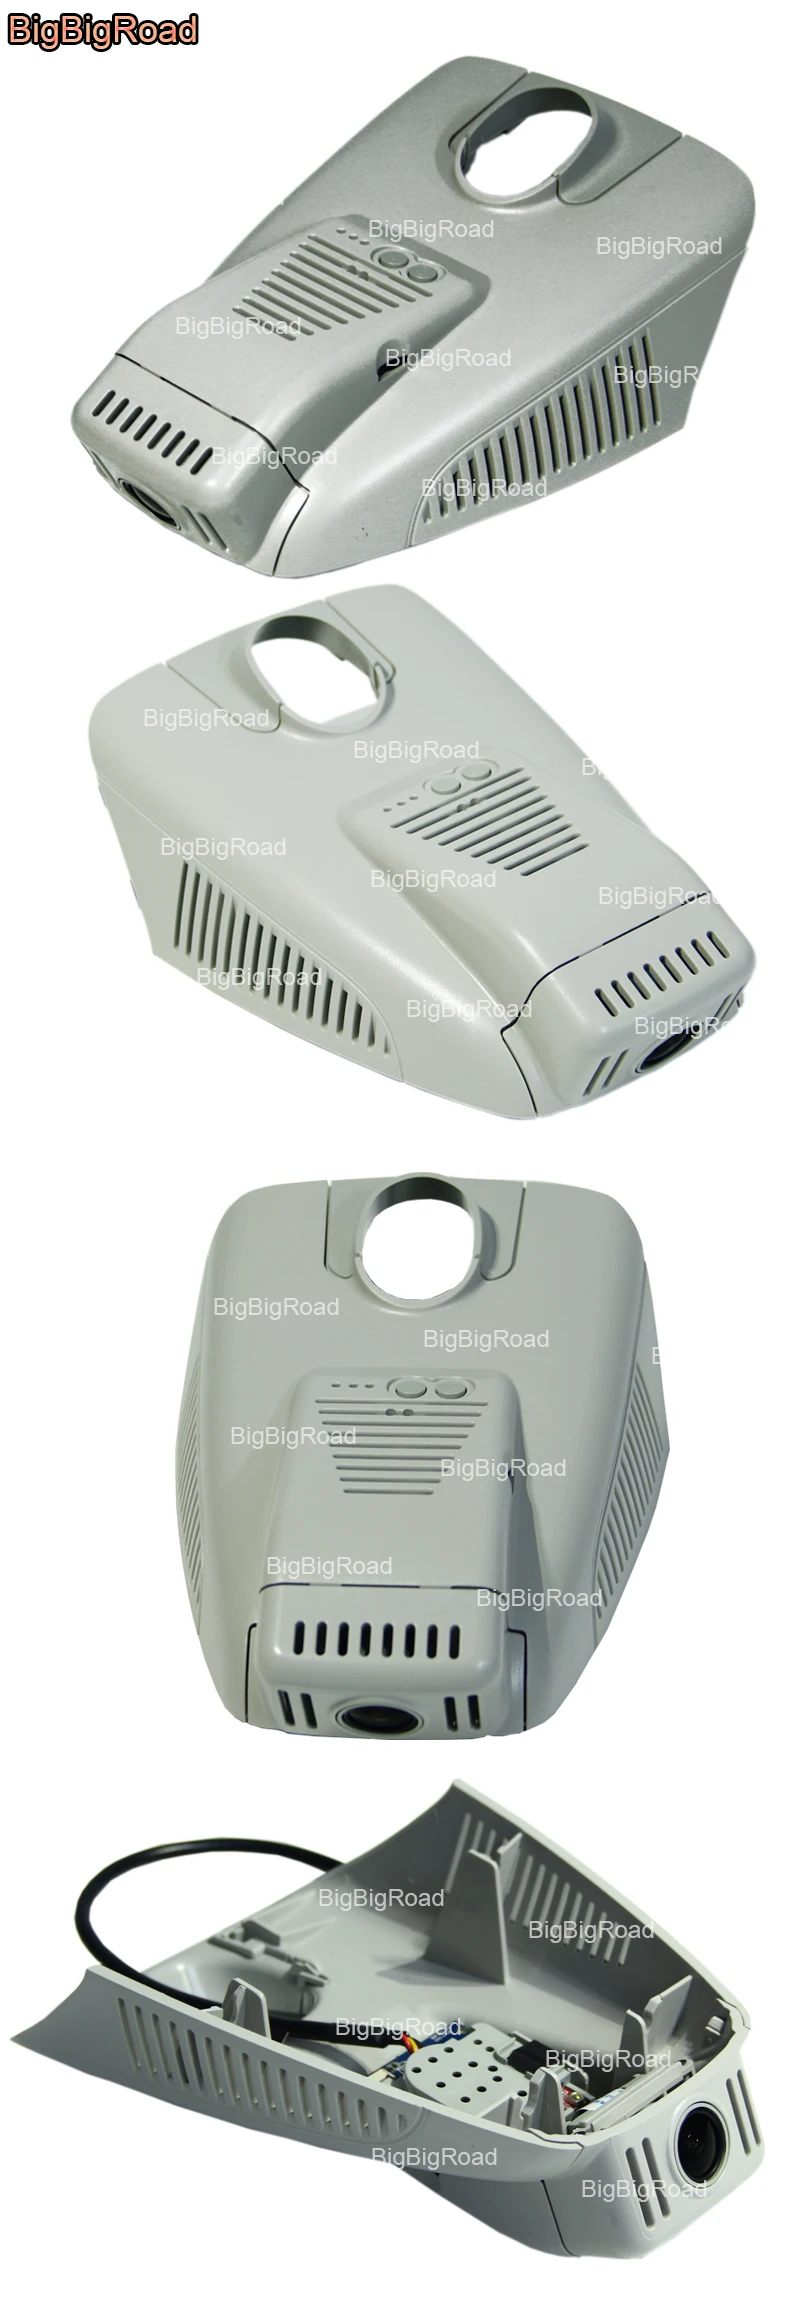 BigBigRoad For Mercedes-Benz GLC 260 low configuration Car Video Recorder Novatek 96655 hidden installation Wifi DVR Dash Cam (6)